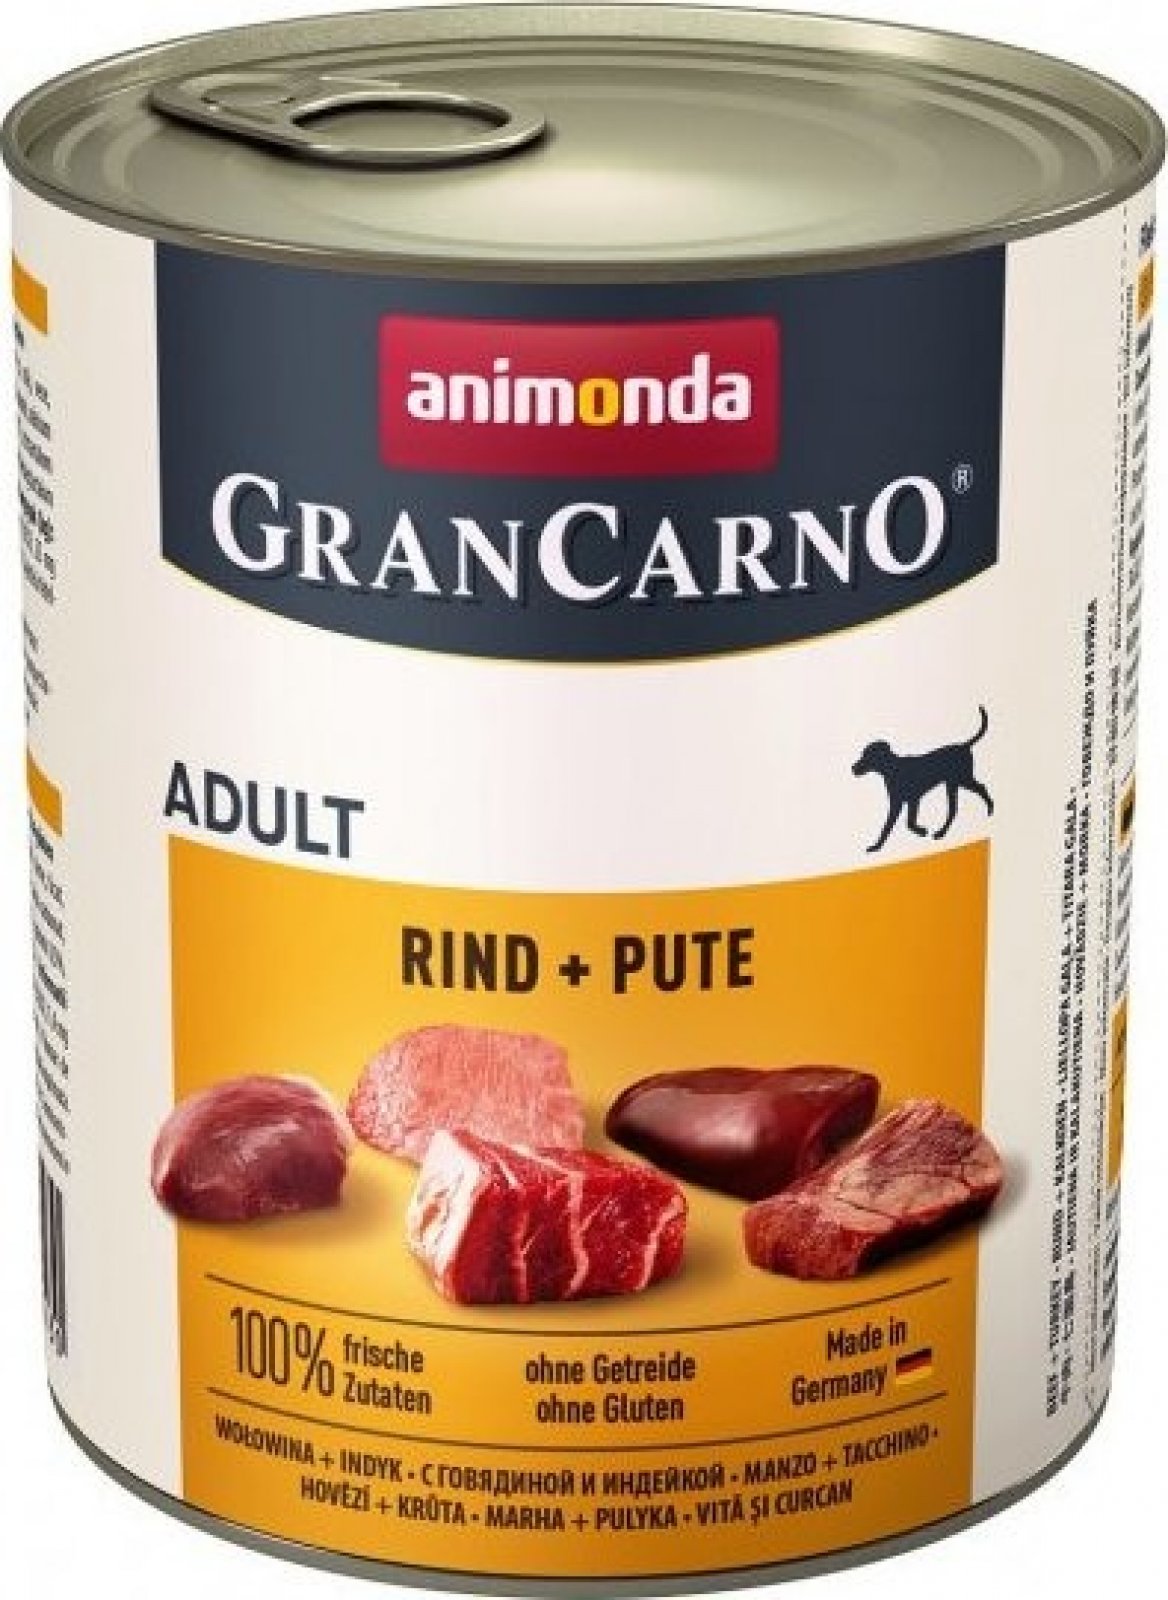 Animonda Gran Carno Adult Beef & Turkey 800g